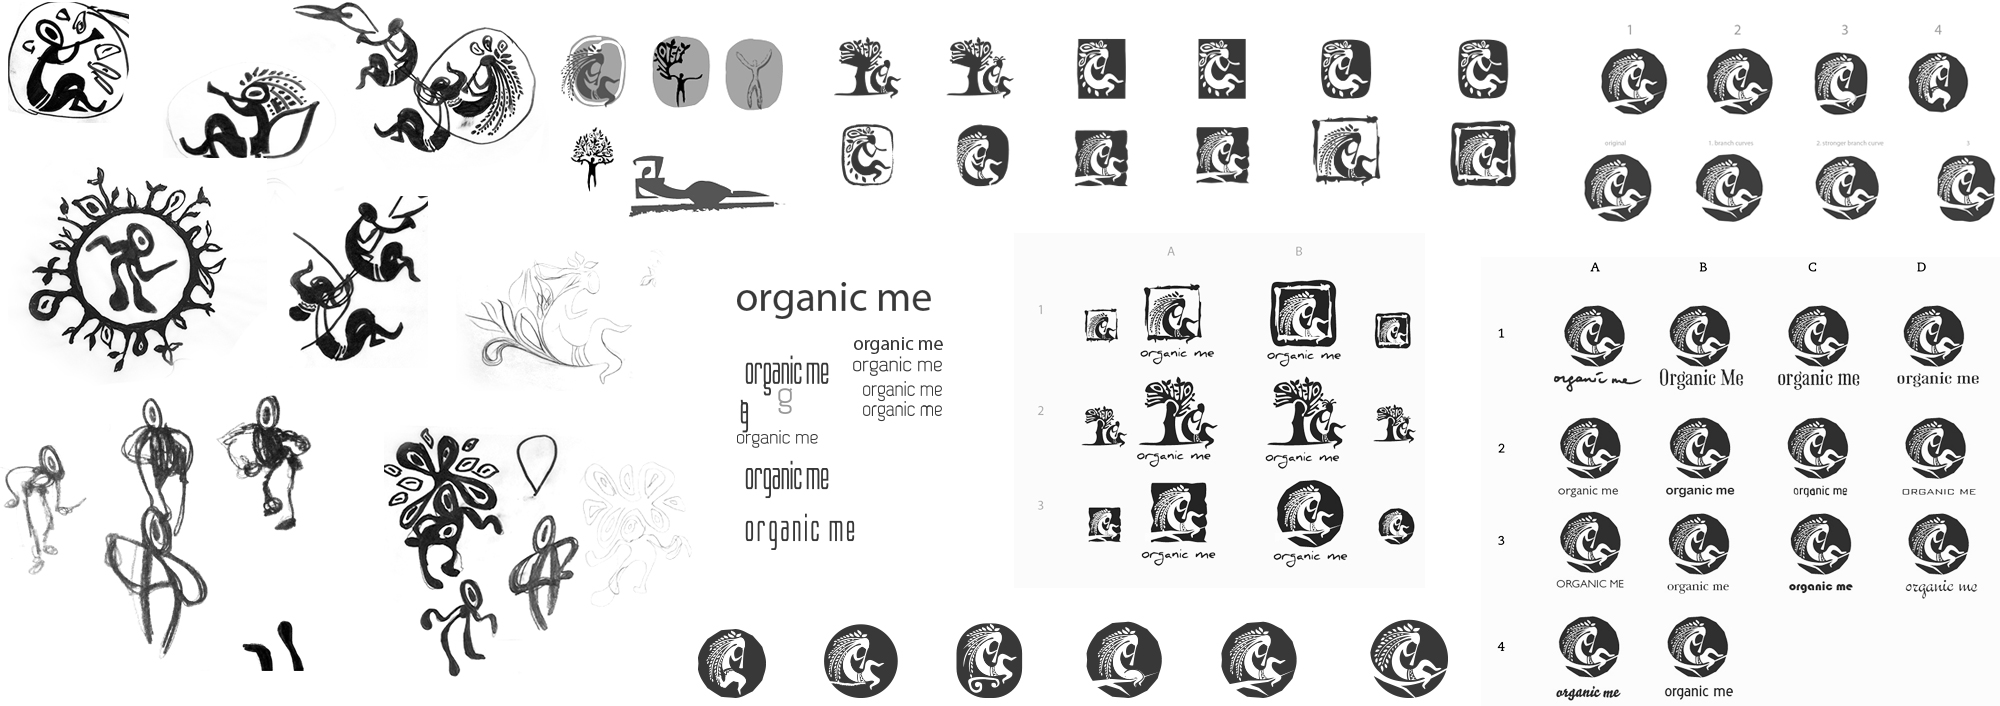 Organic Me logo process